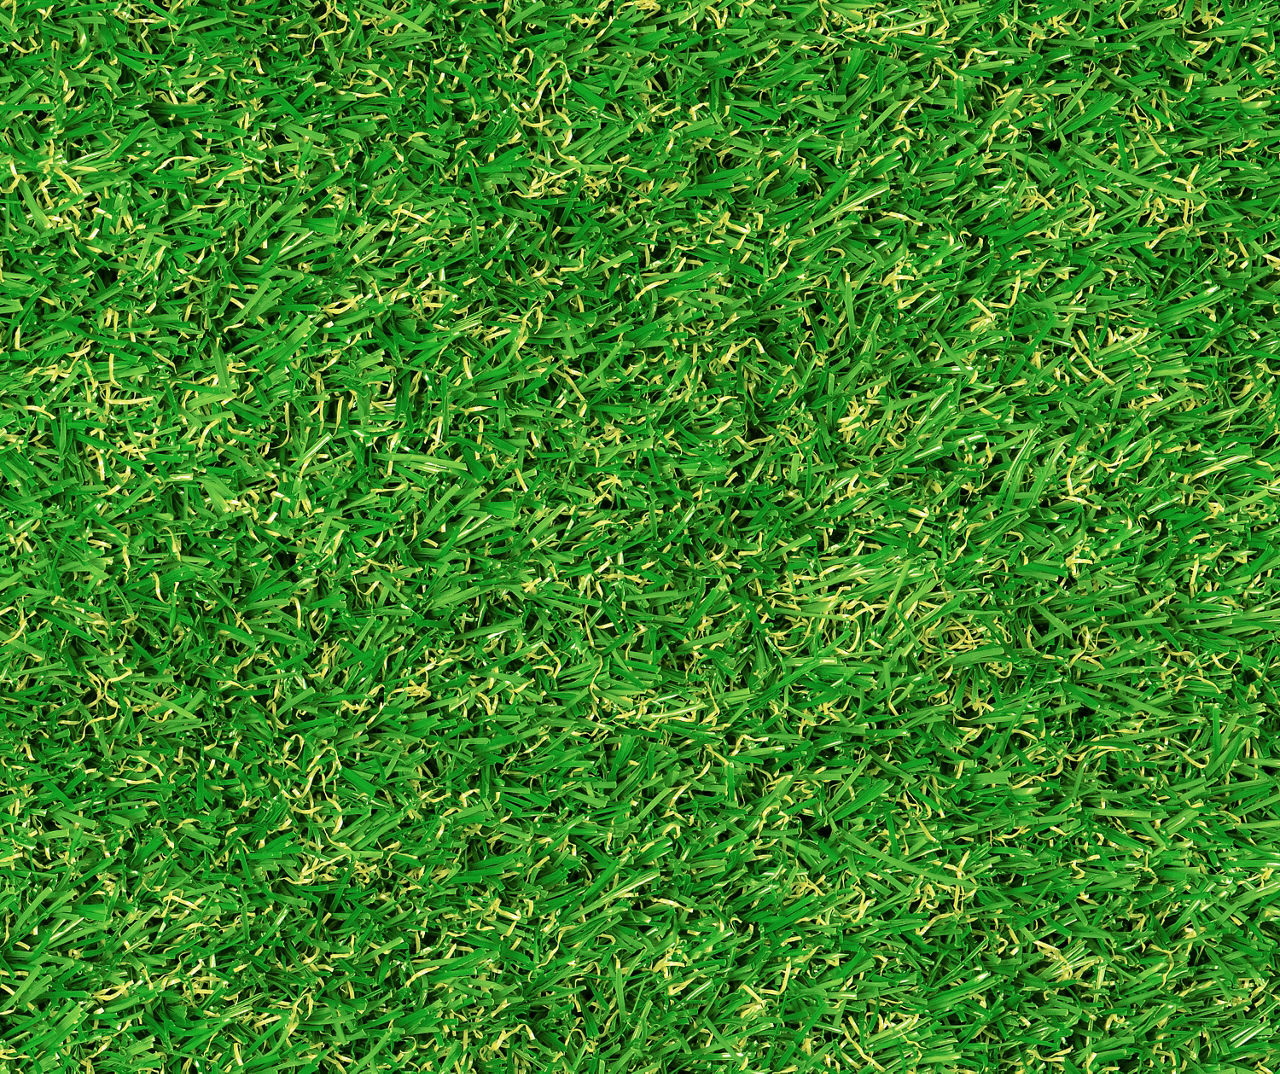 Precut Artificial Turf Grass, (5' x 6') | Big Lots